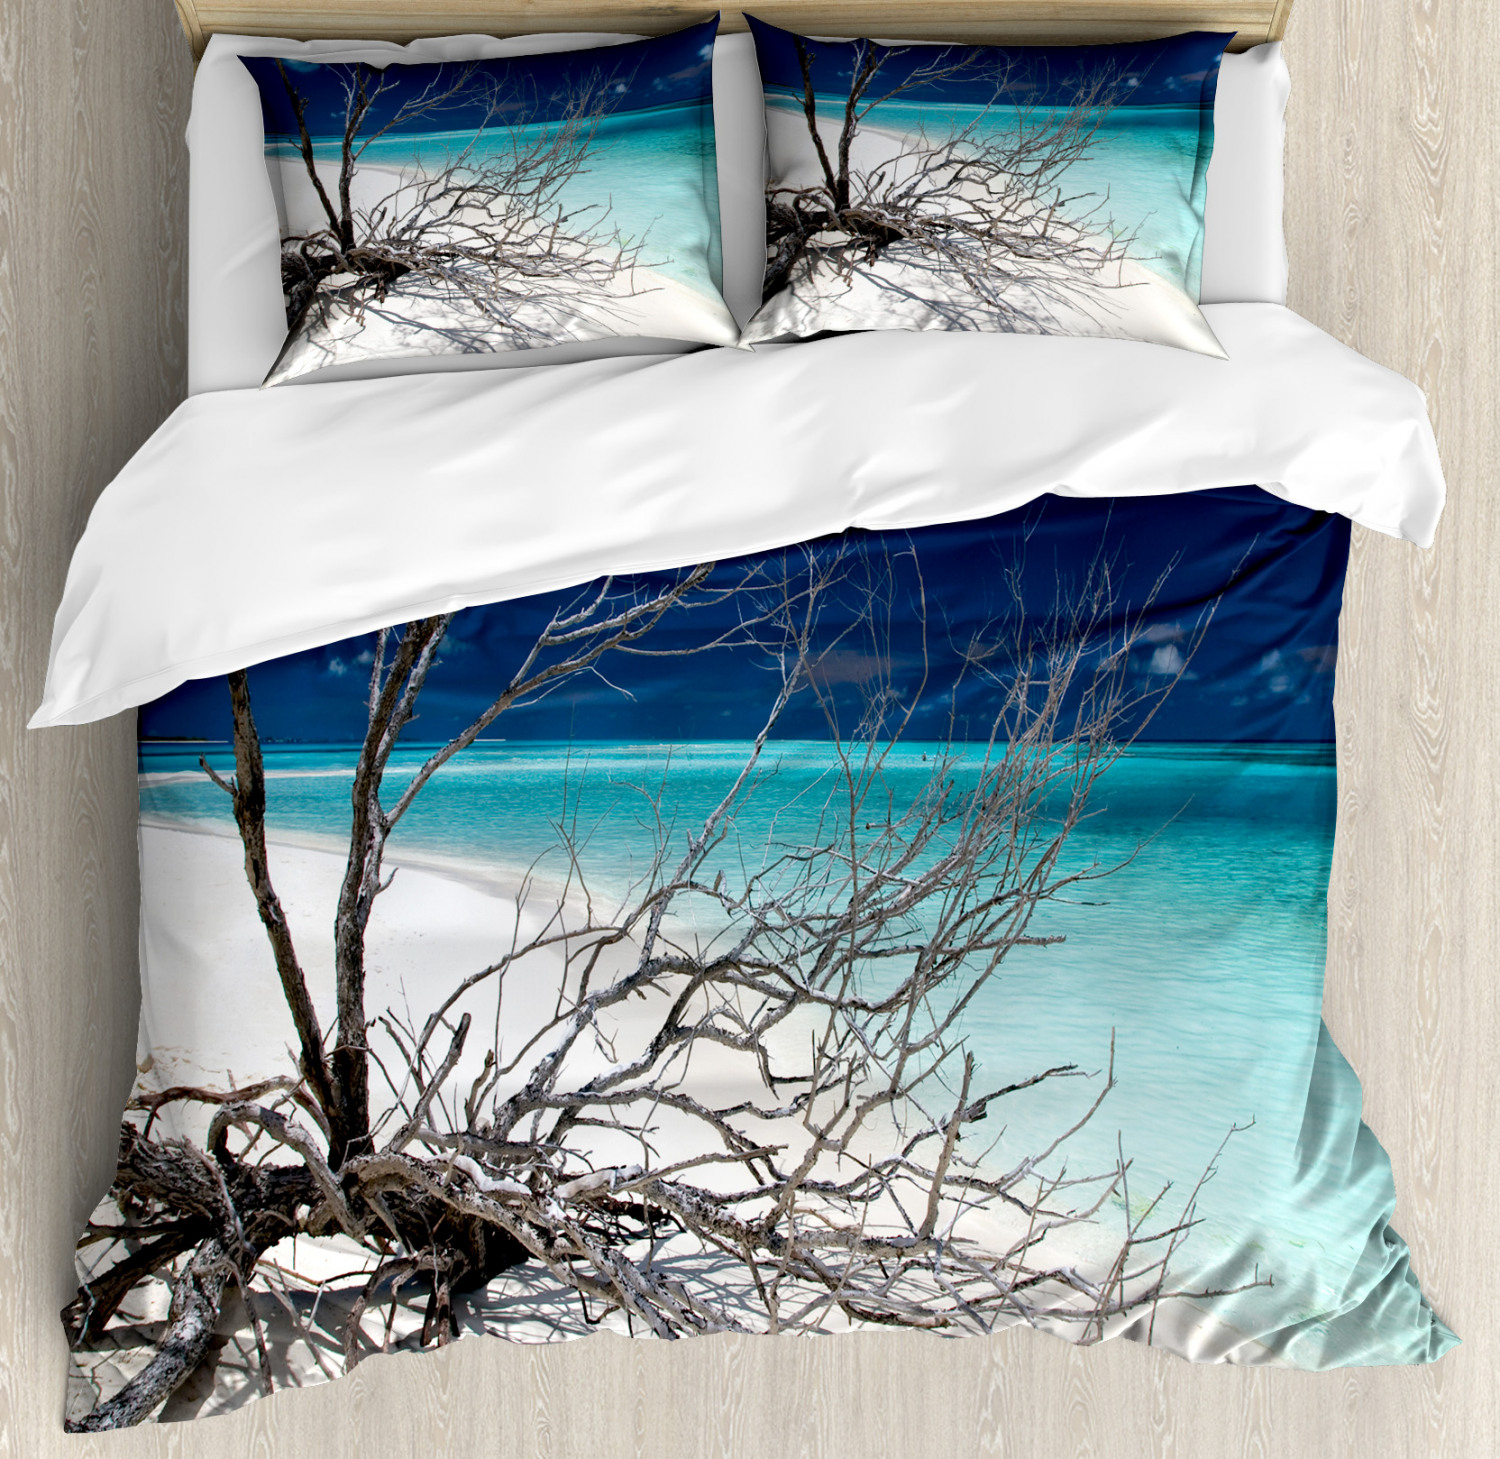 Beach Duvet Cover Set With Pillow Shams Seascape Theme Driftwood